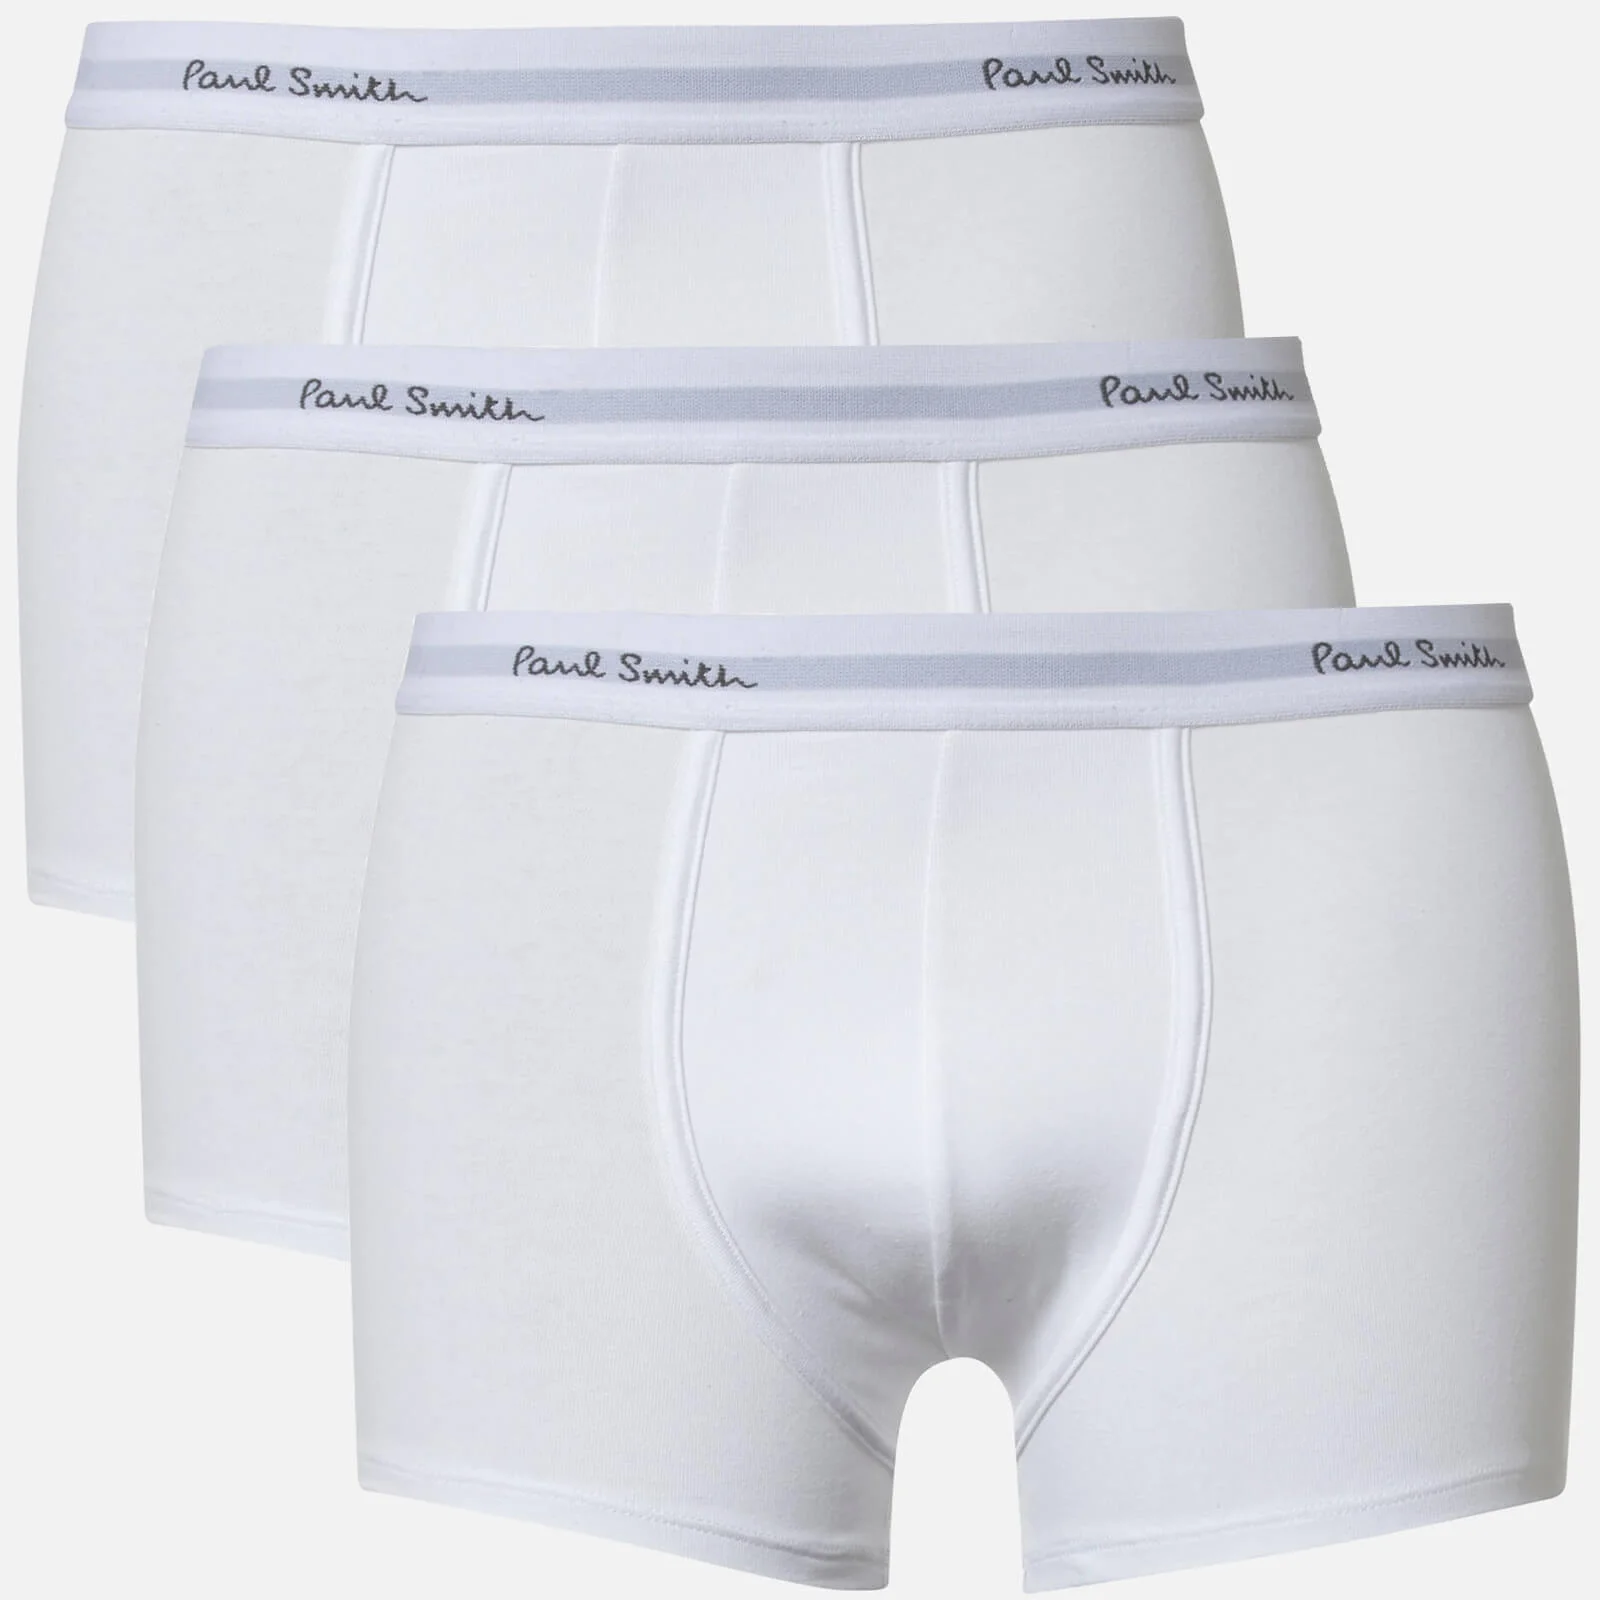 Paul Smith Men's 3 Pack Trunk Boxer Shorts - White Image 1